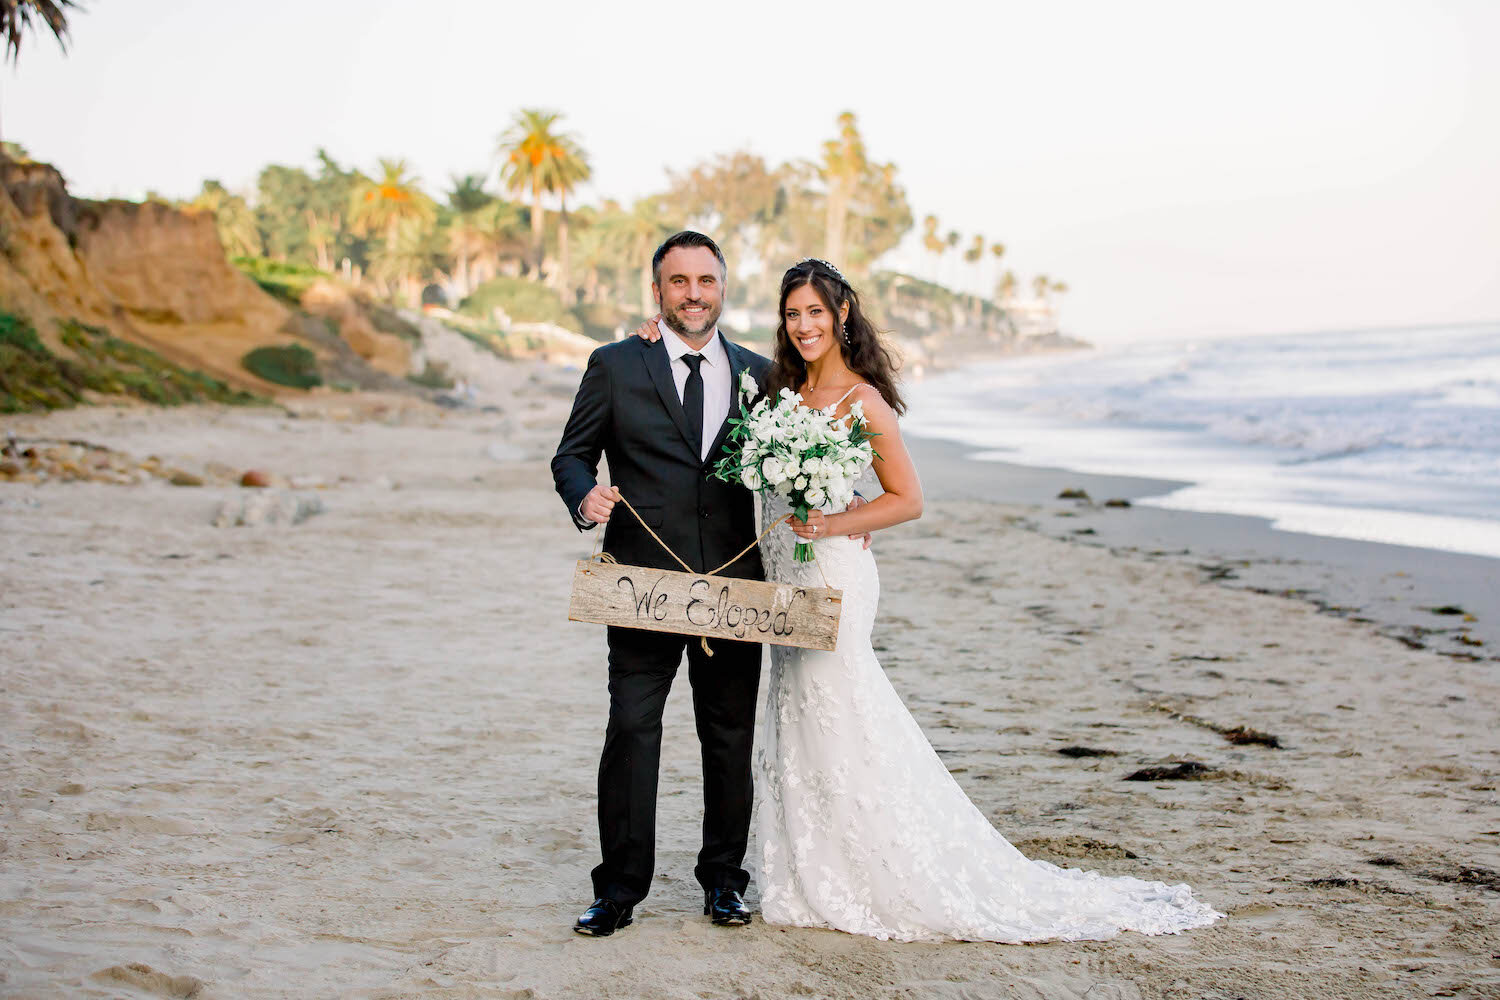  couple holding “We Eloped” sign on the Santa Barbara beach 